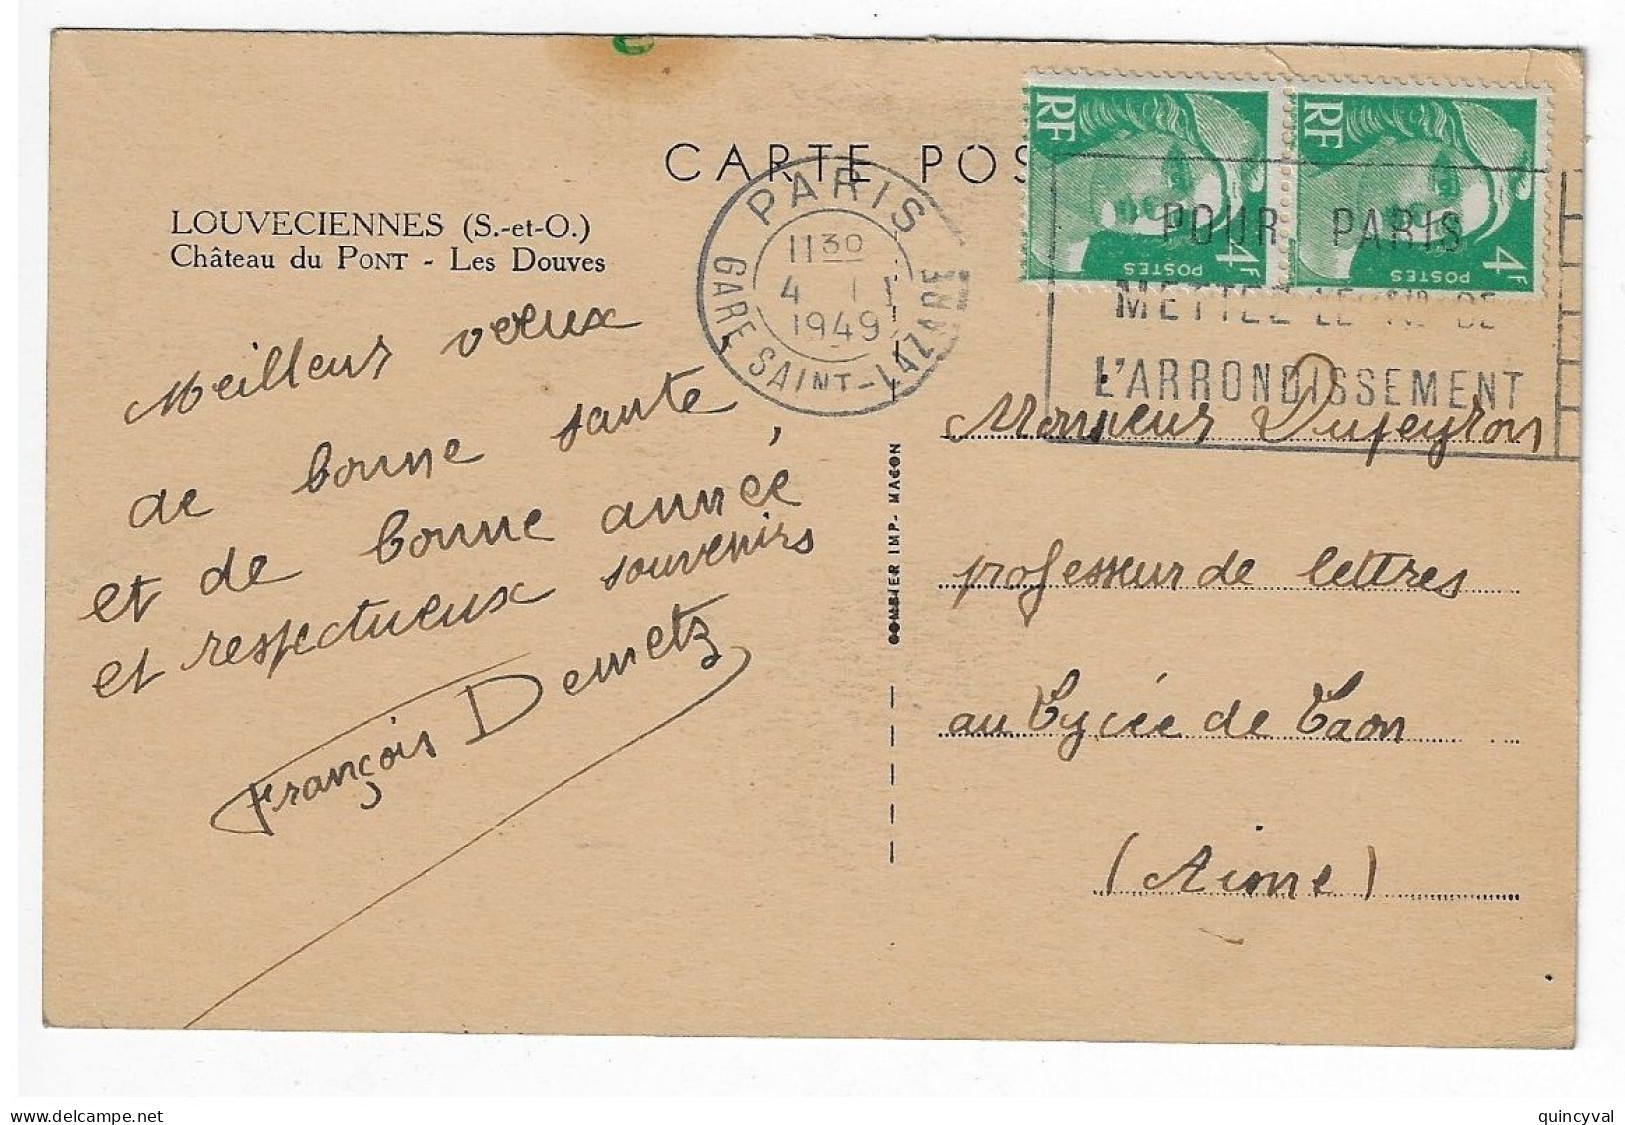 PARIS Gare St Lazare Carte Postale 4 F Gandon Vert Emeraude X 2 Ob Meca 4 1 1949 - 1945-54 Marianne De Gandon